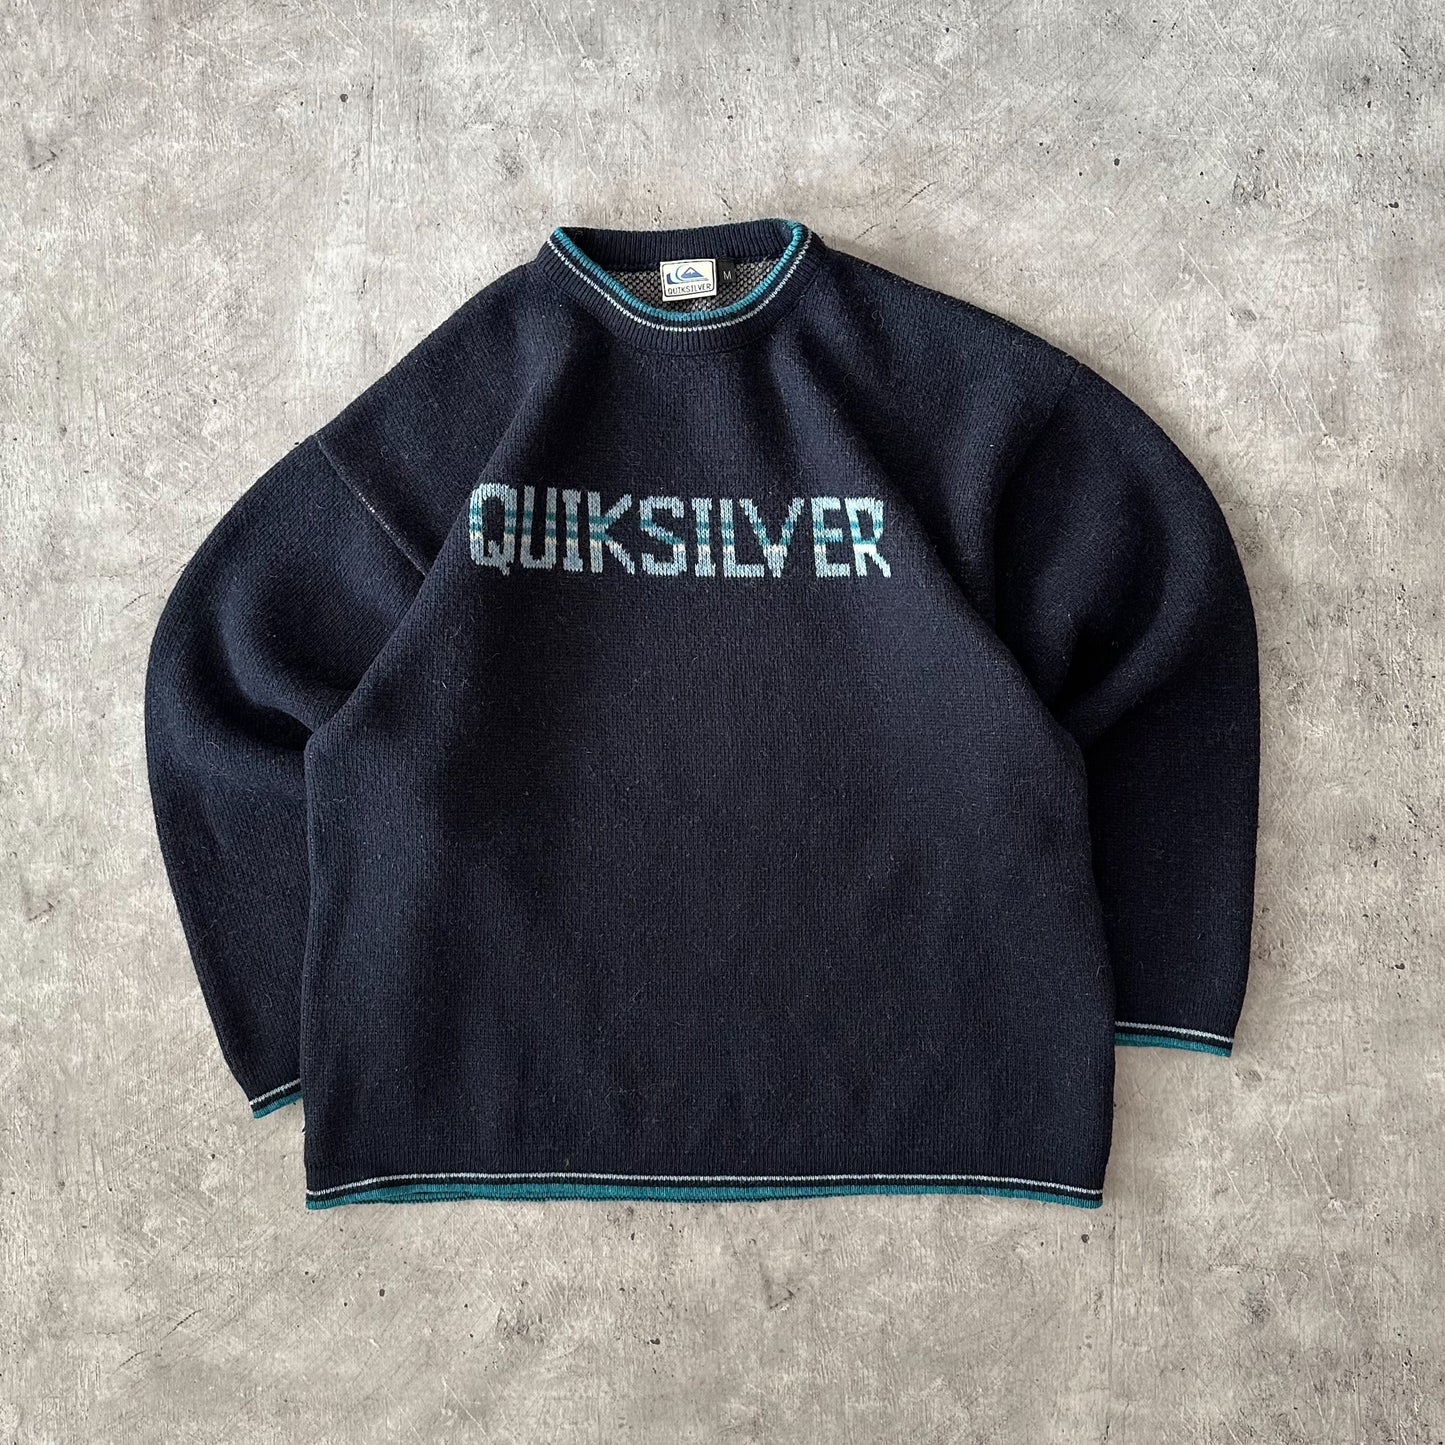 Vintage Quiksilver Knit Sweater